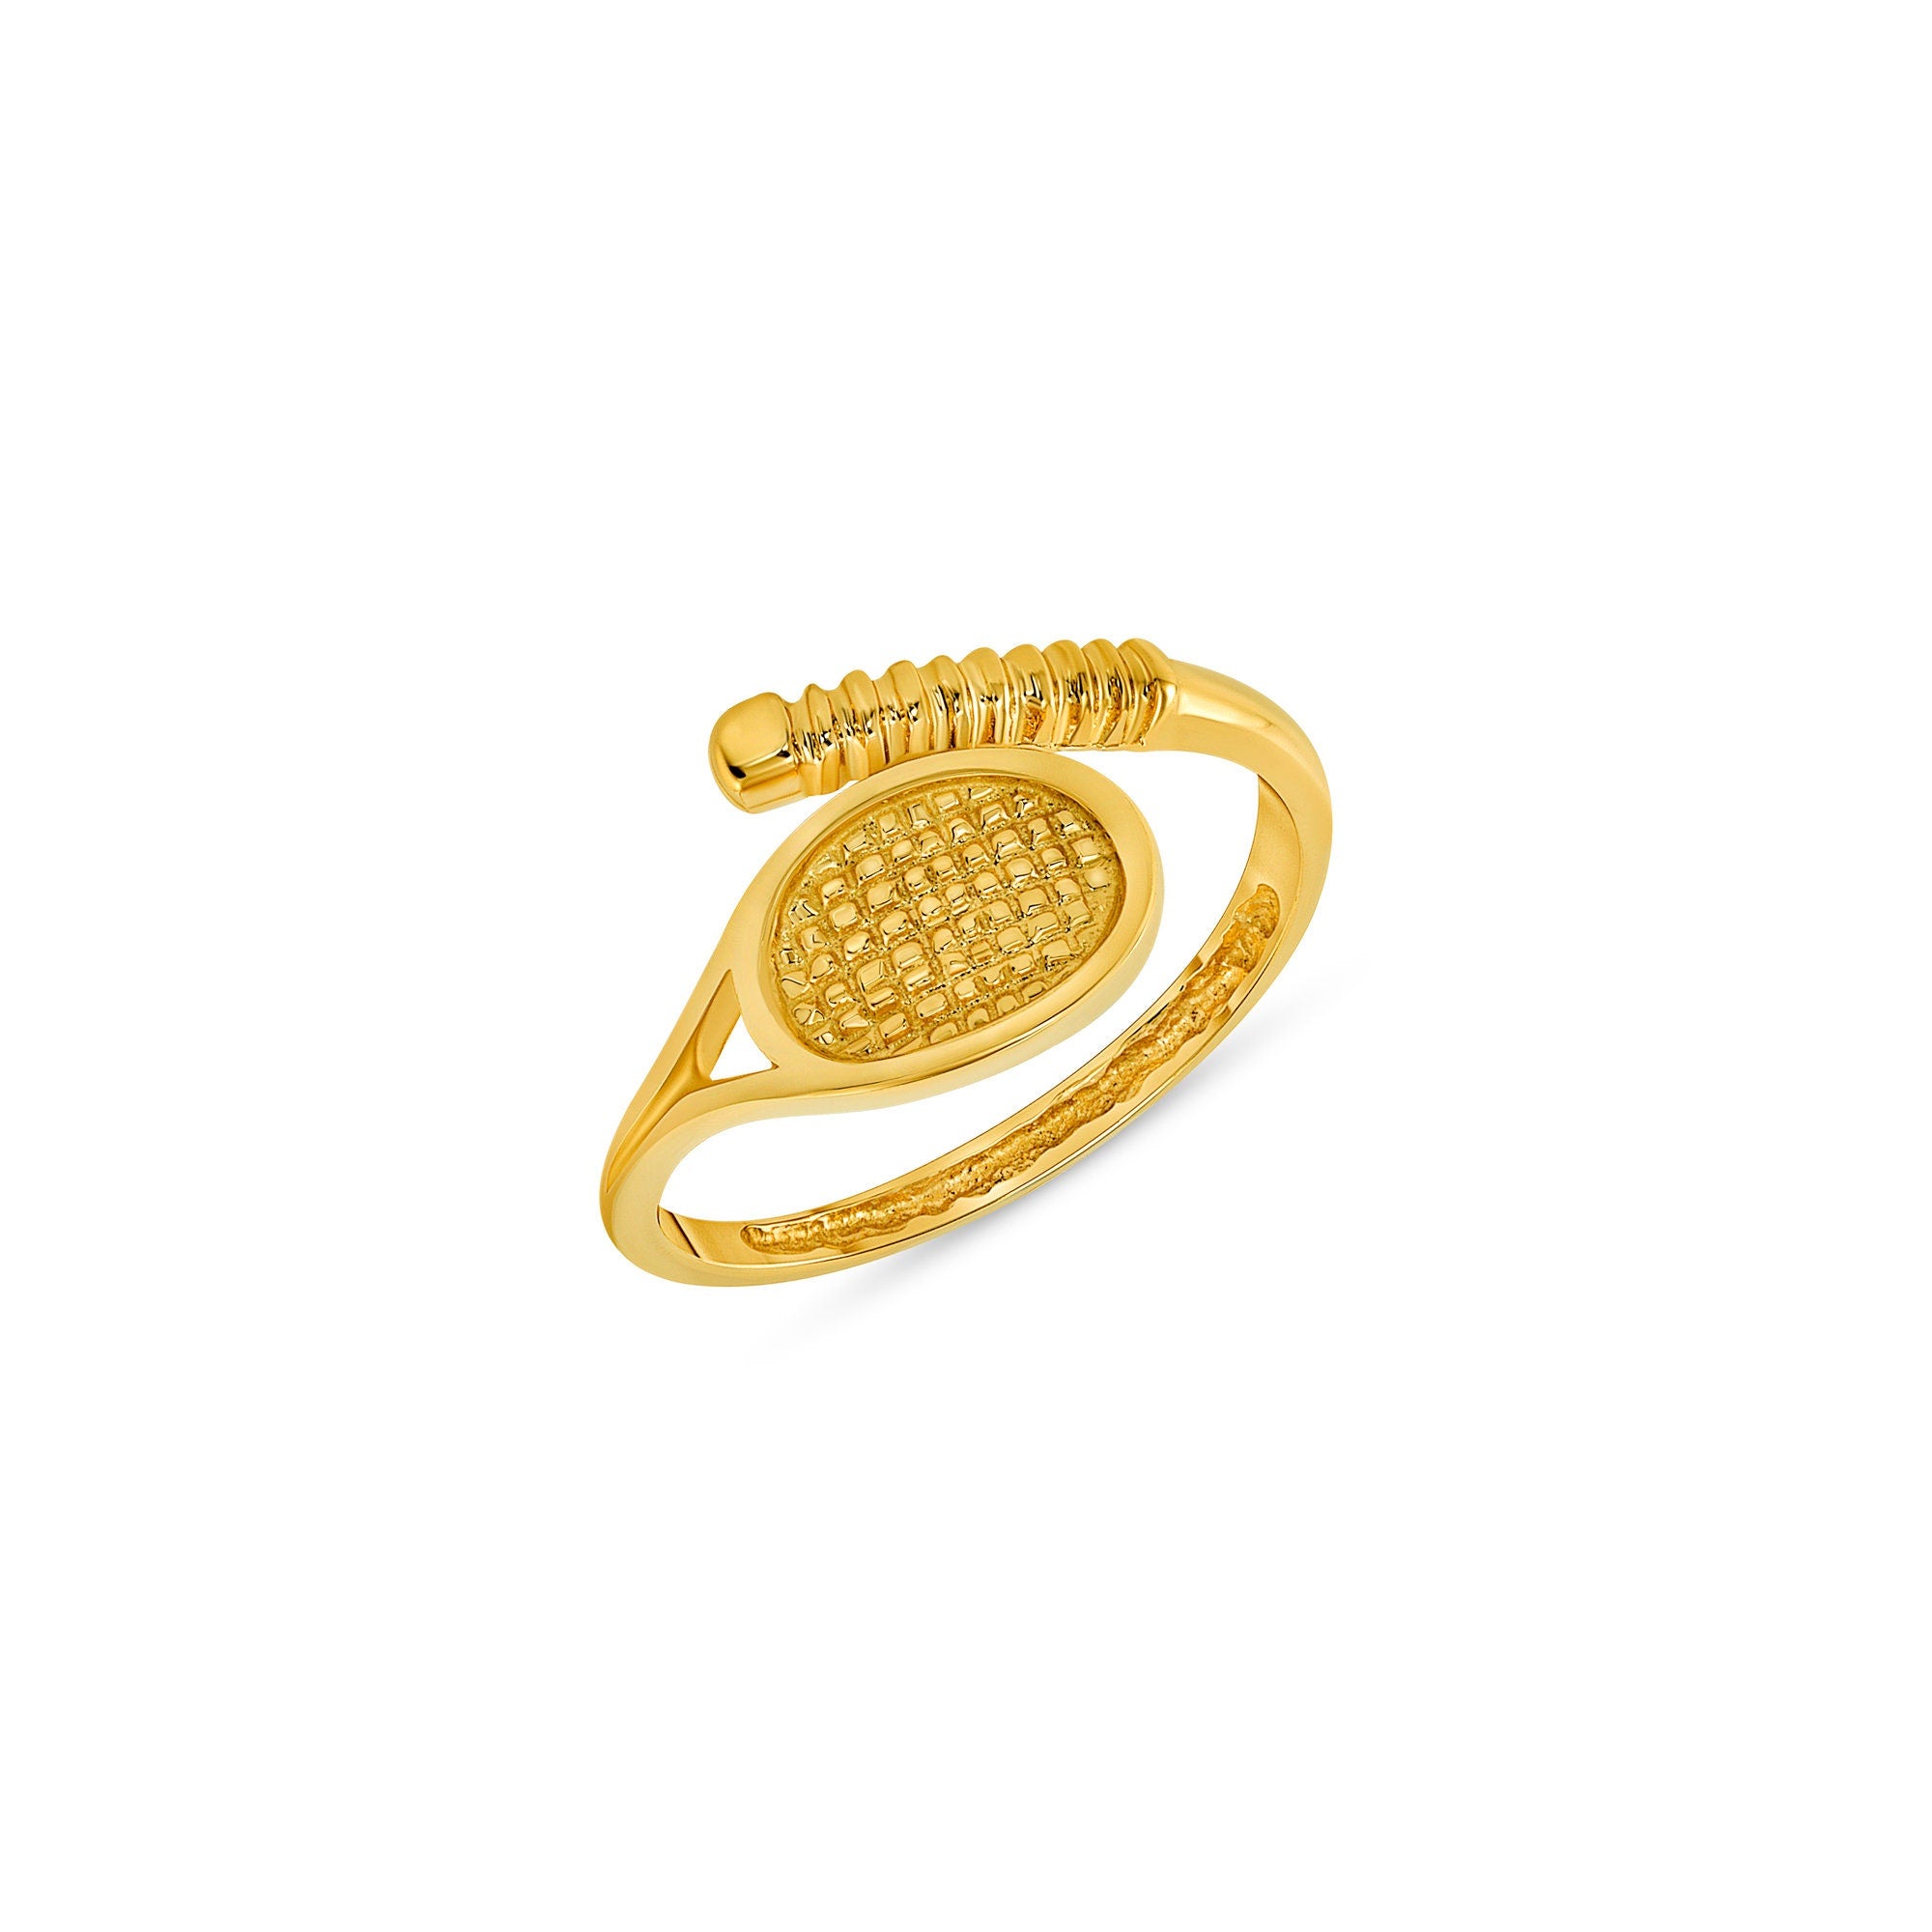 14k solid gold tennis racket toe ring